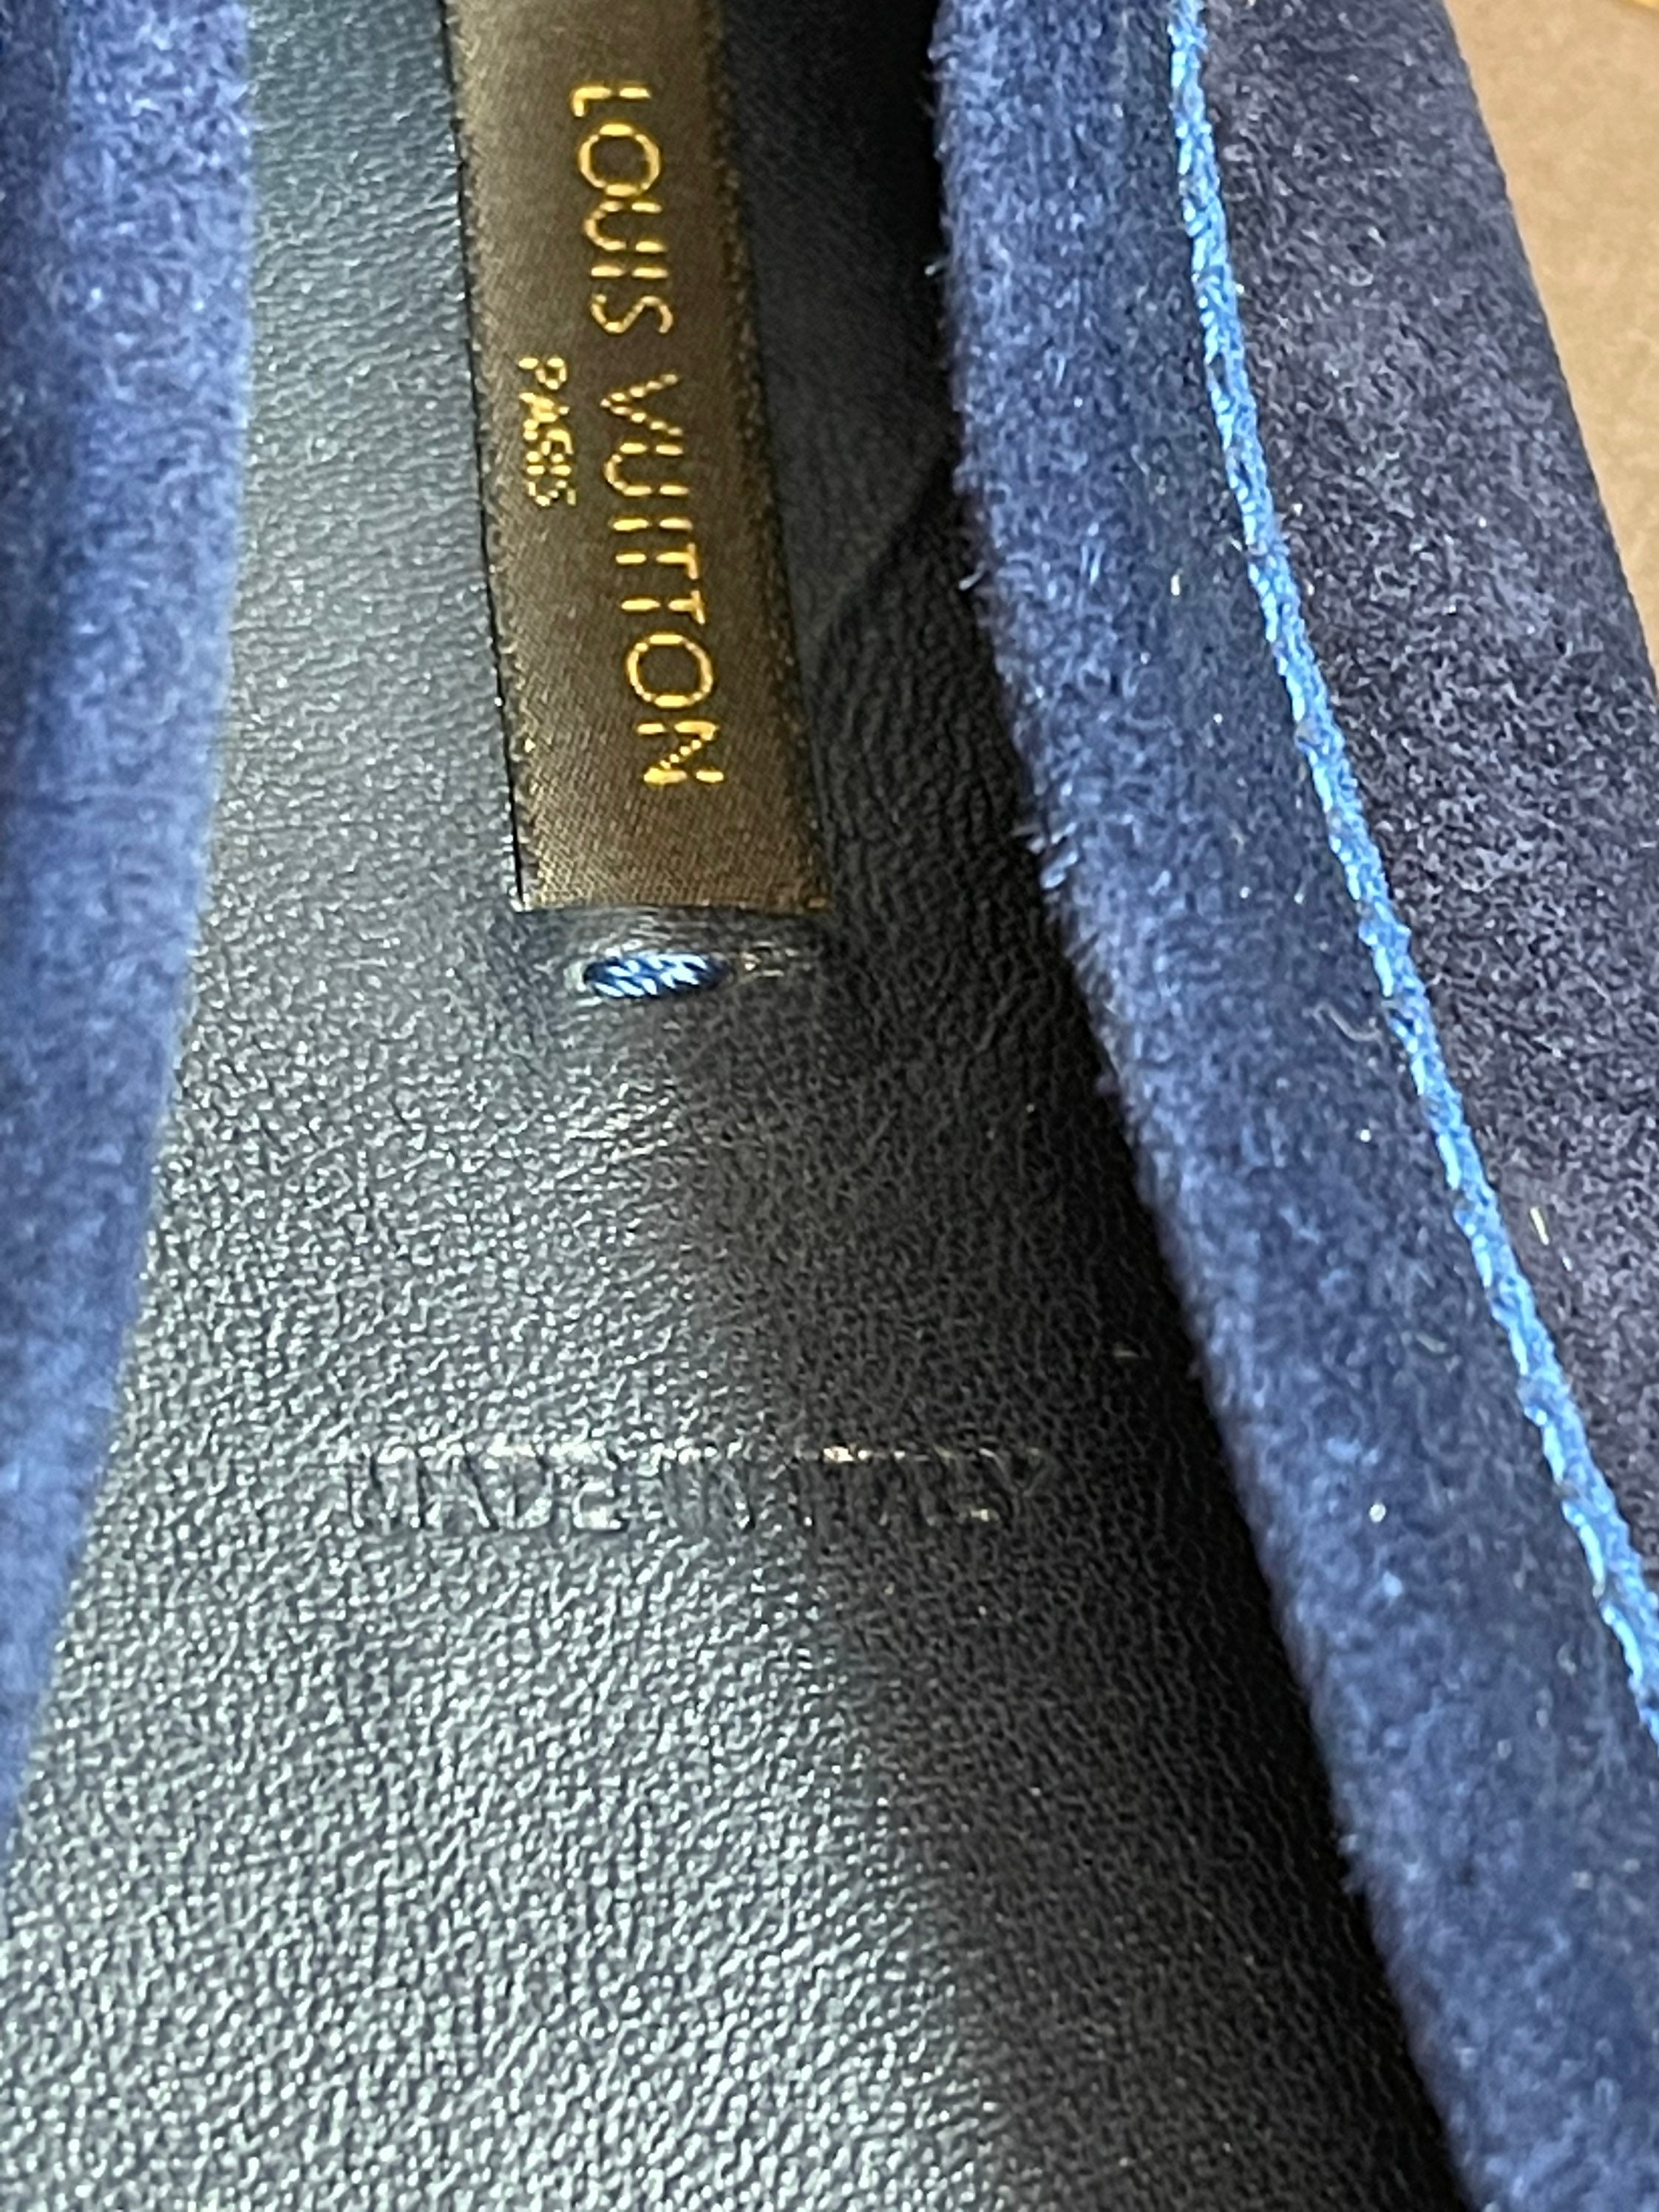 Louis Vuitton Women's Shoes Royal Blue Suede Initials -  Norway